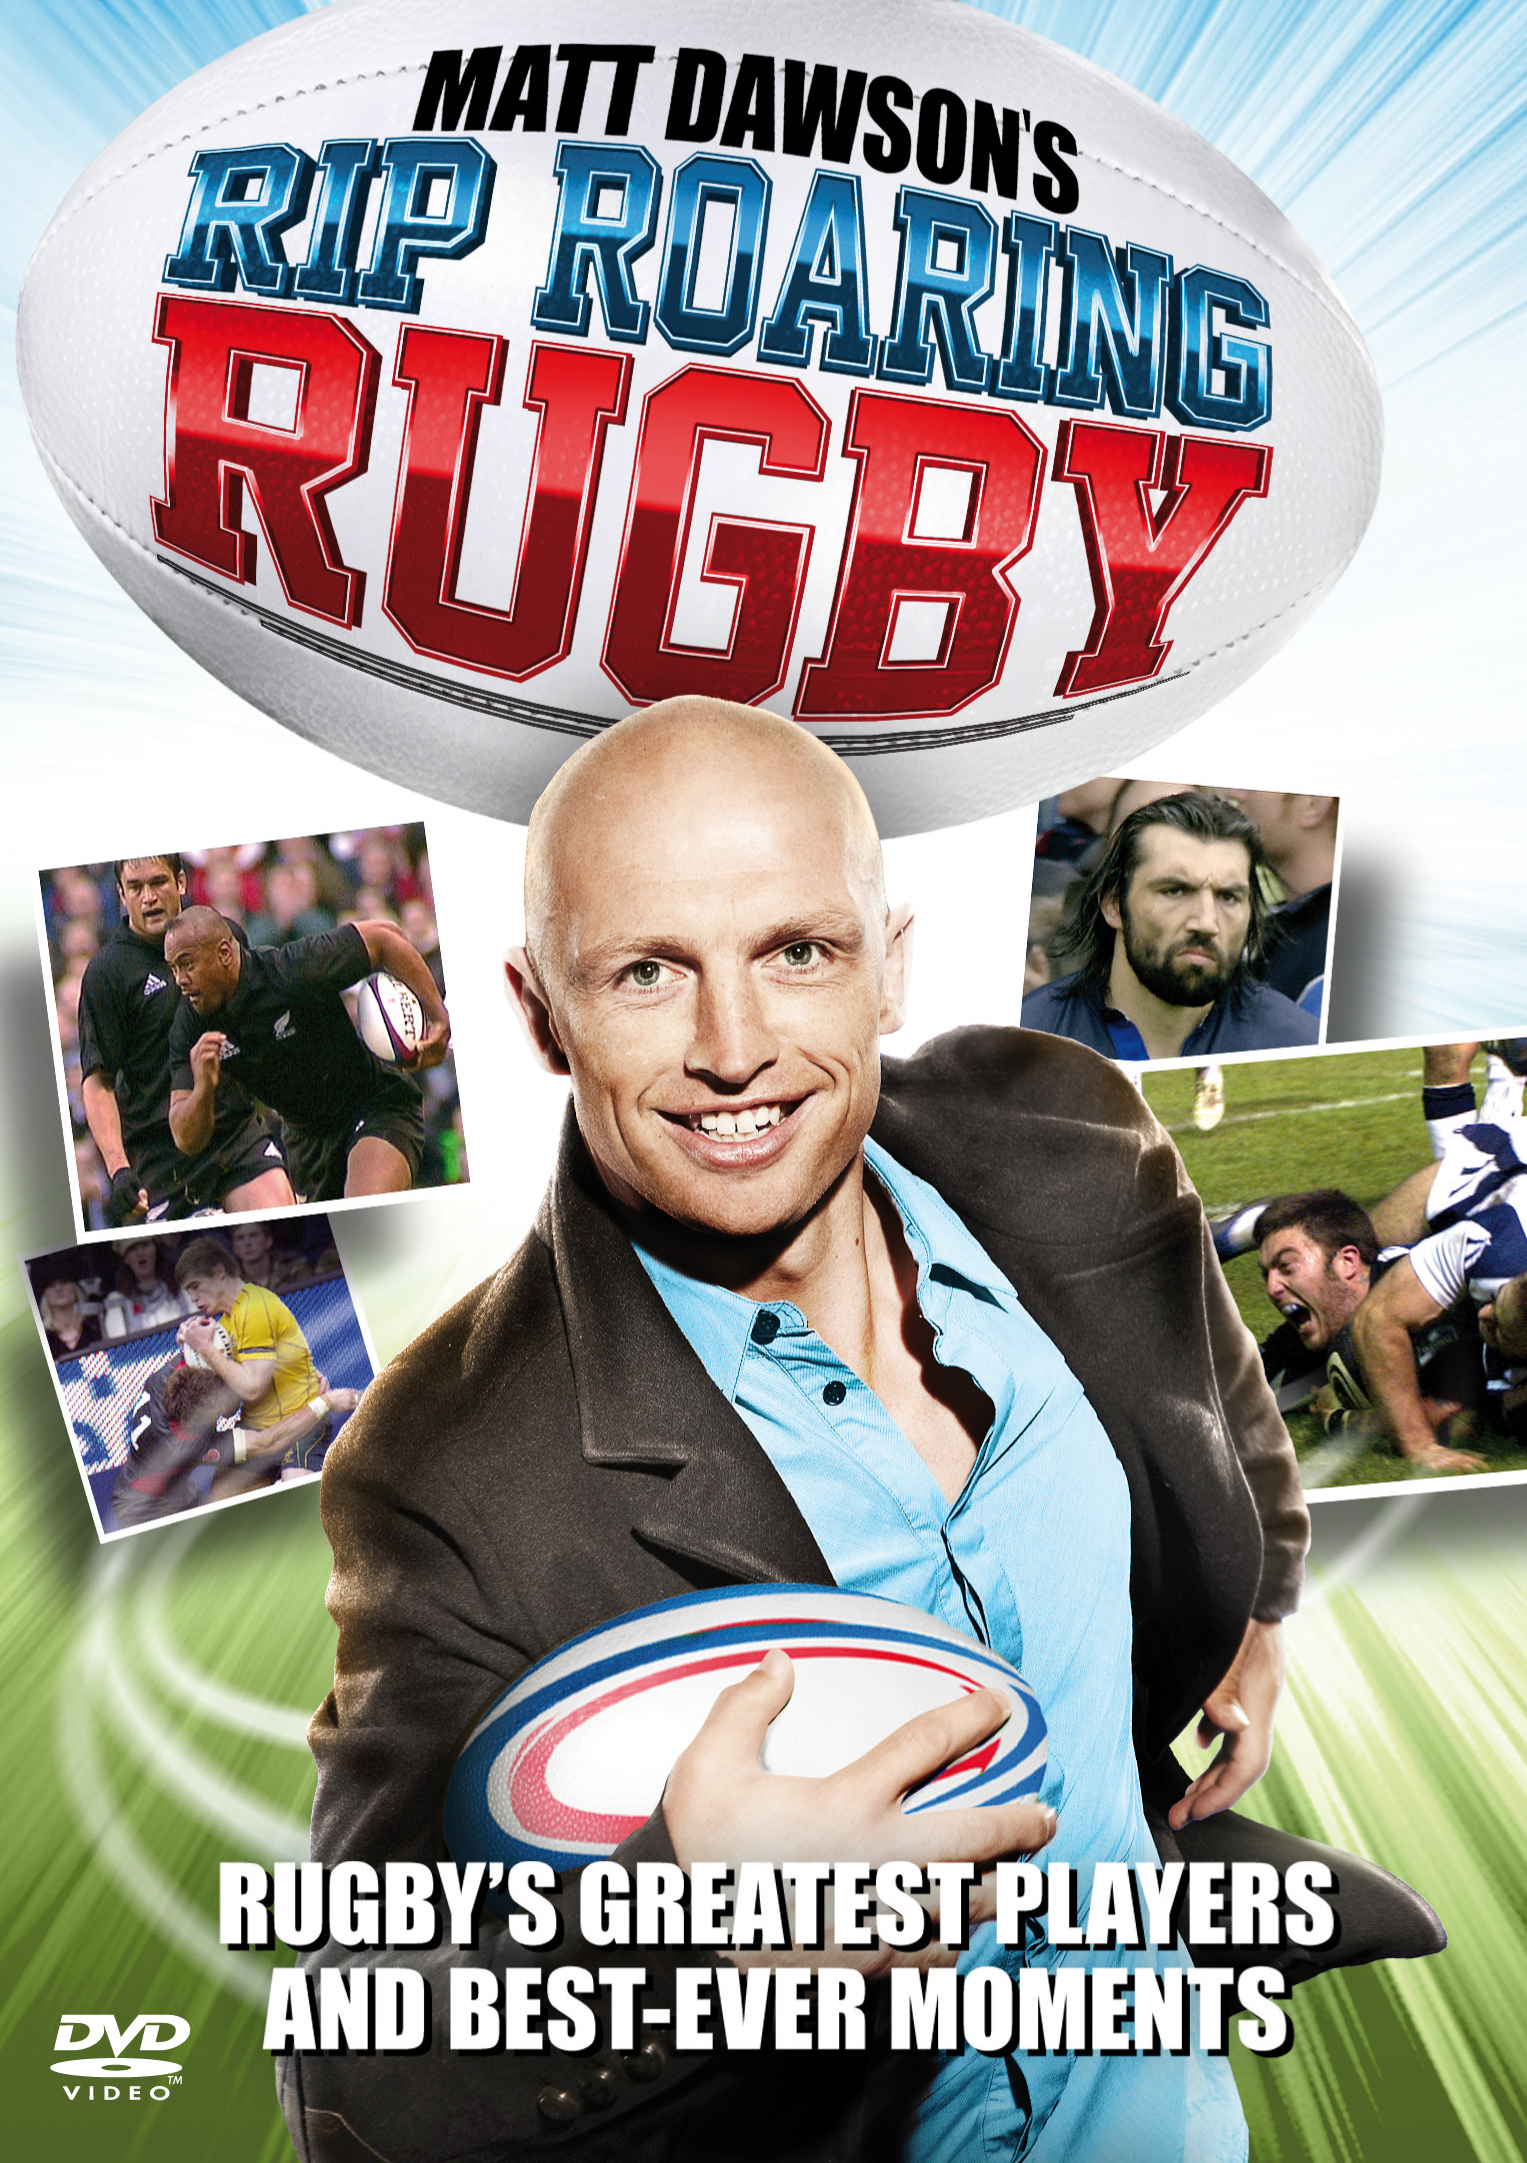 Matt damon's Rip Roaring Rugby DVD